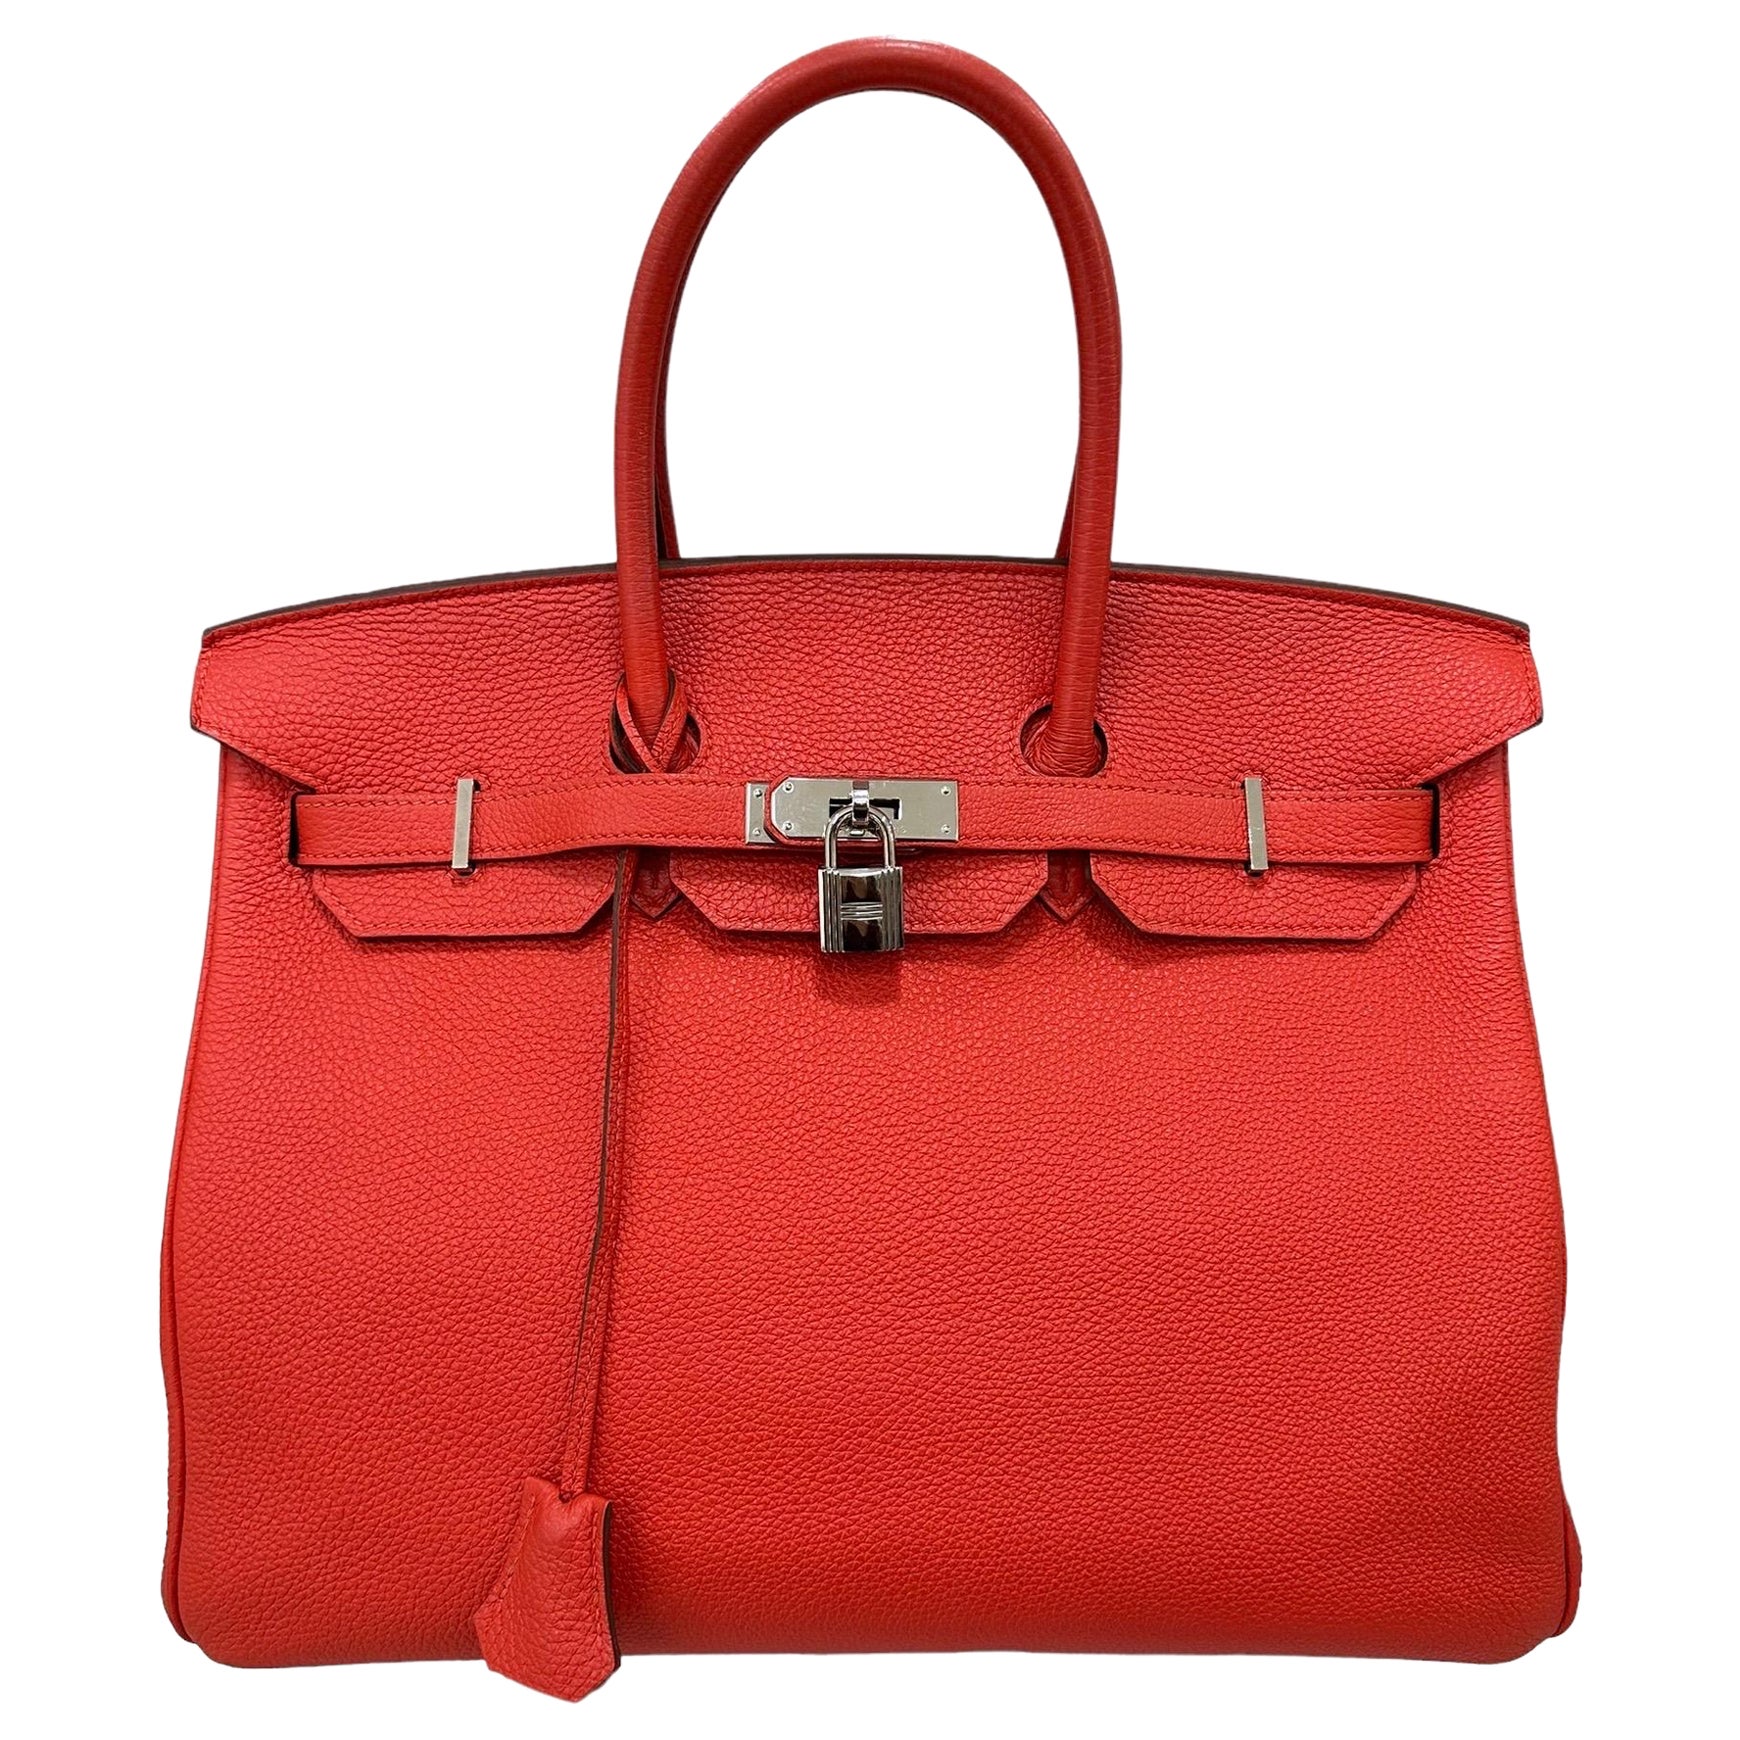 2011 Hermès Birkin 35 Togo Leather Rouge Capucine Top Handle Bag en vente